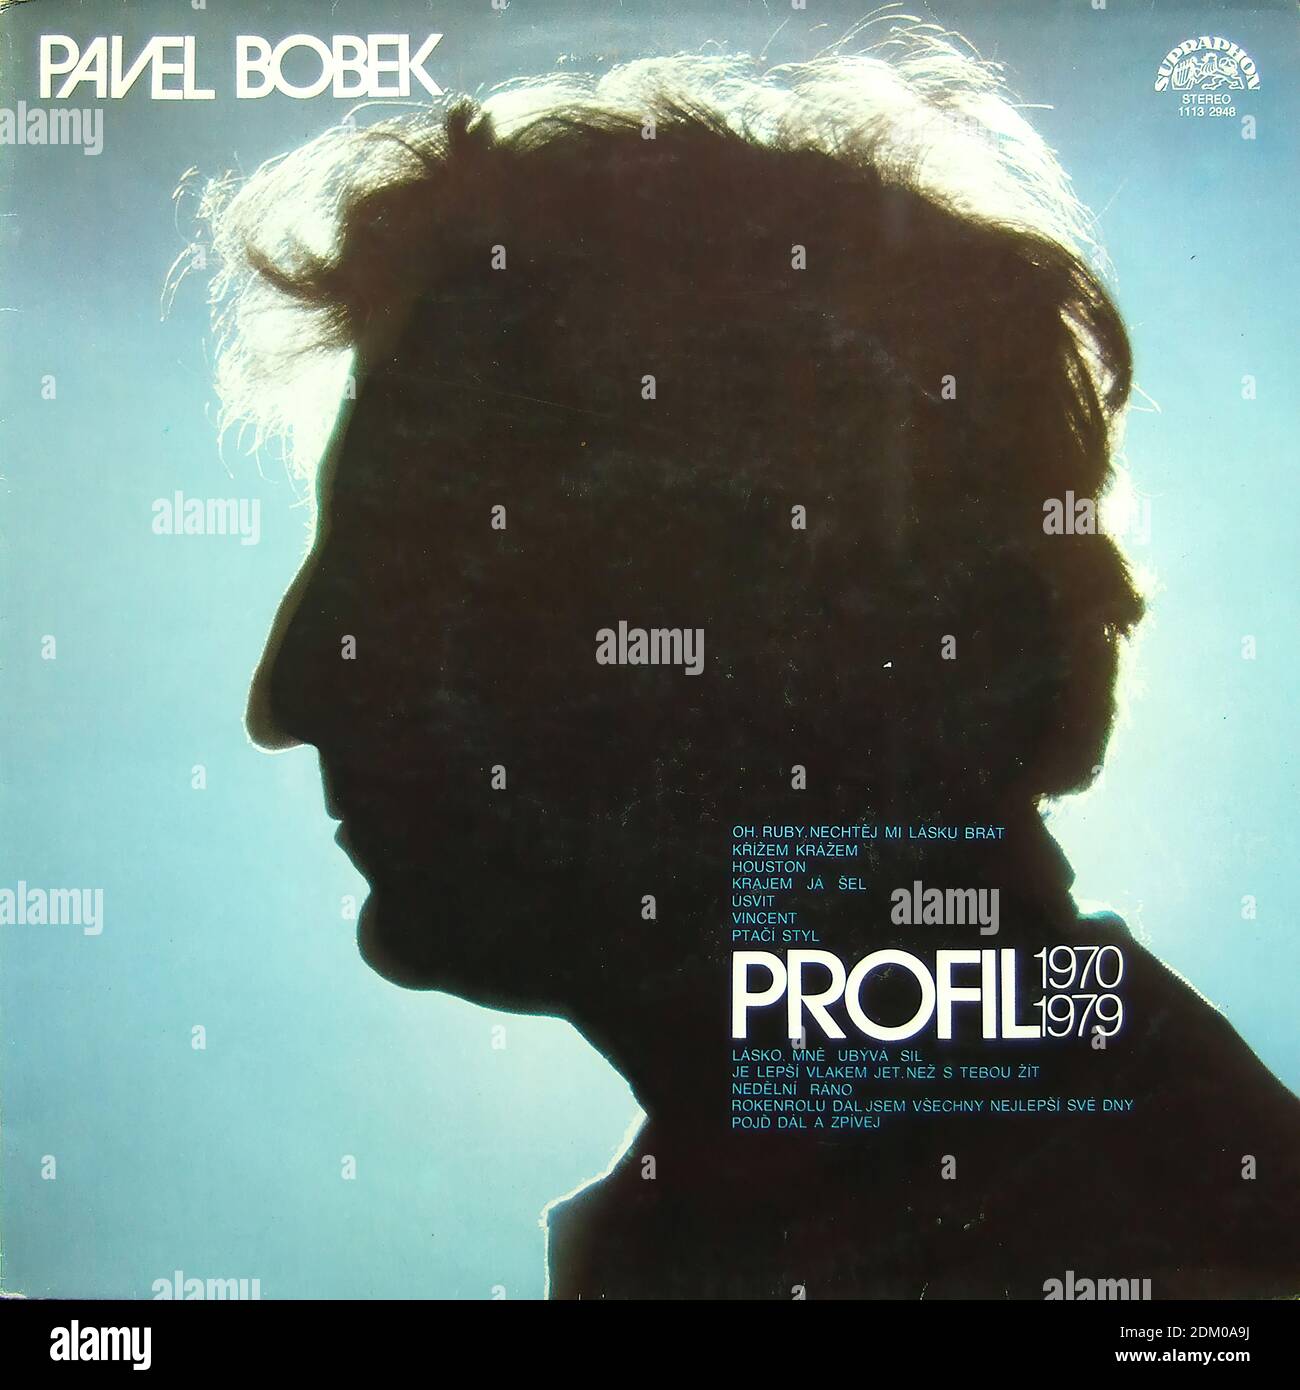 Pavel Bobek - Profil 1970-1979, Supraphon 1113 2948 - Vintage Vinyl Album Cover Stockfoto